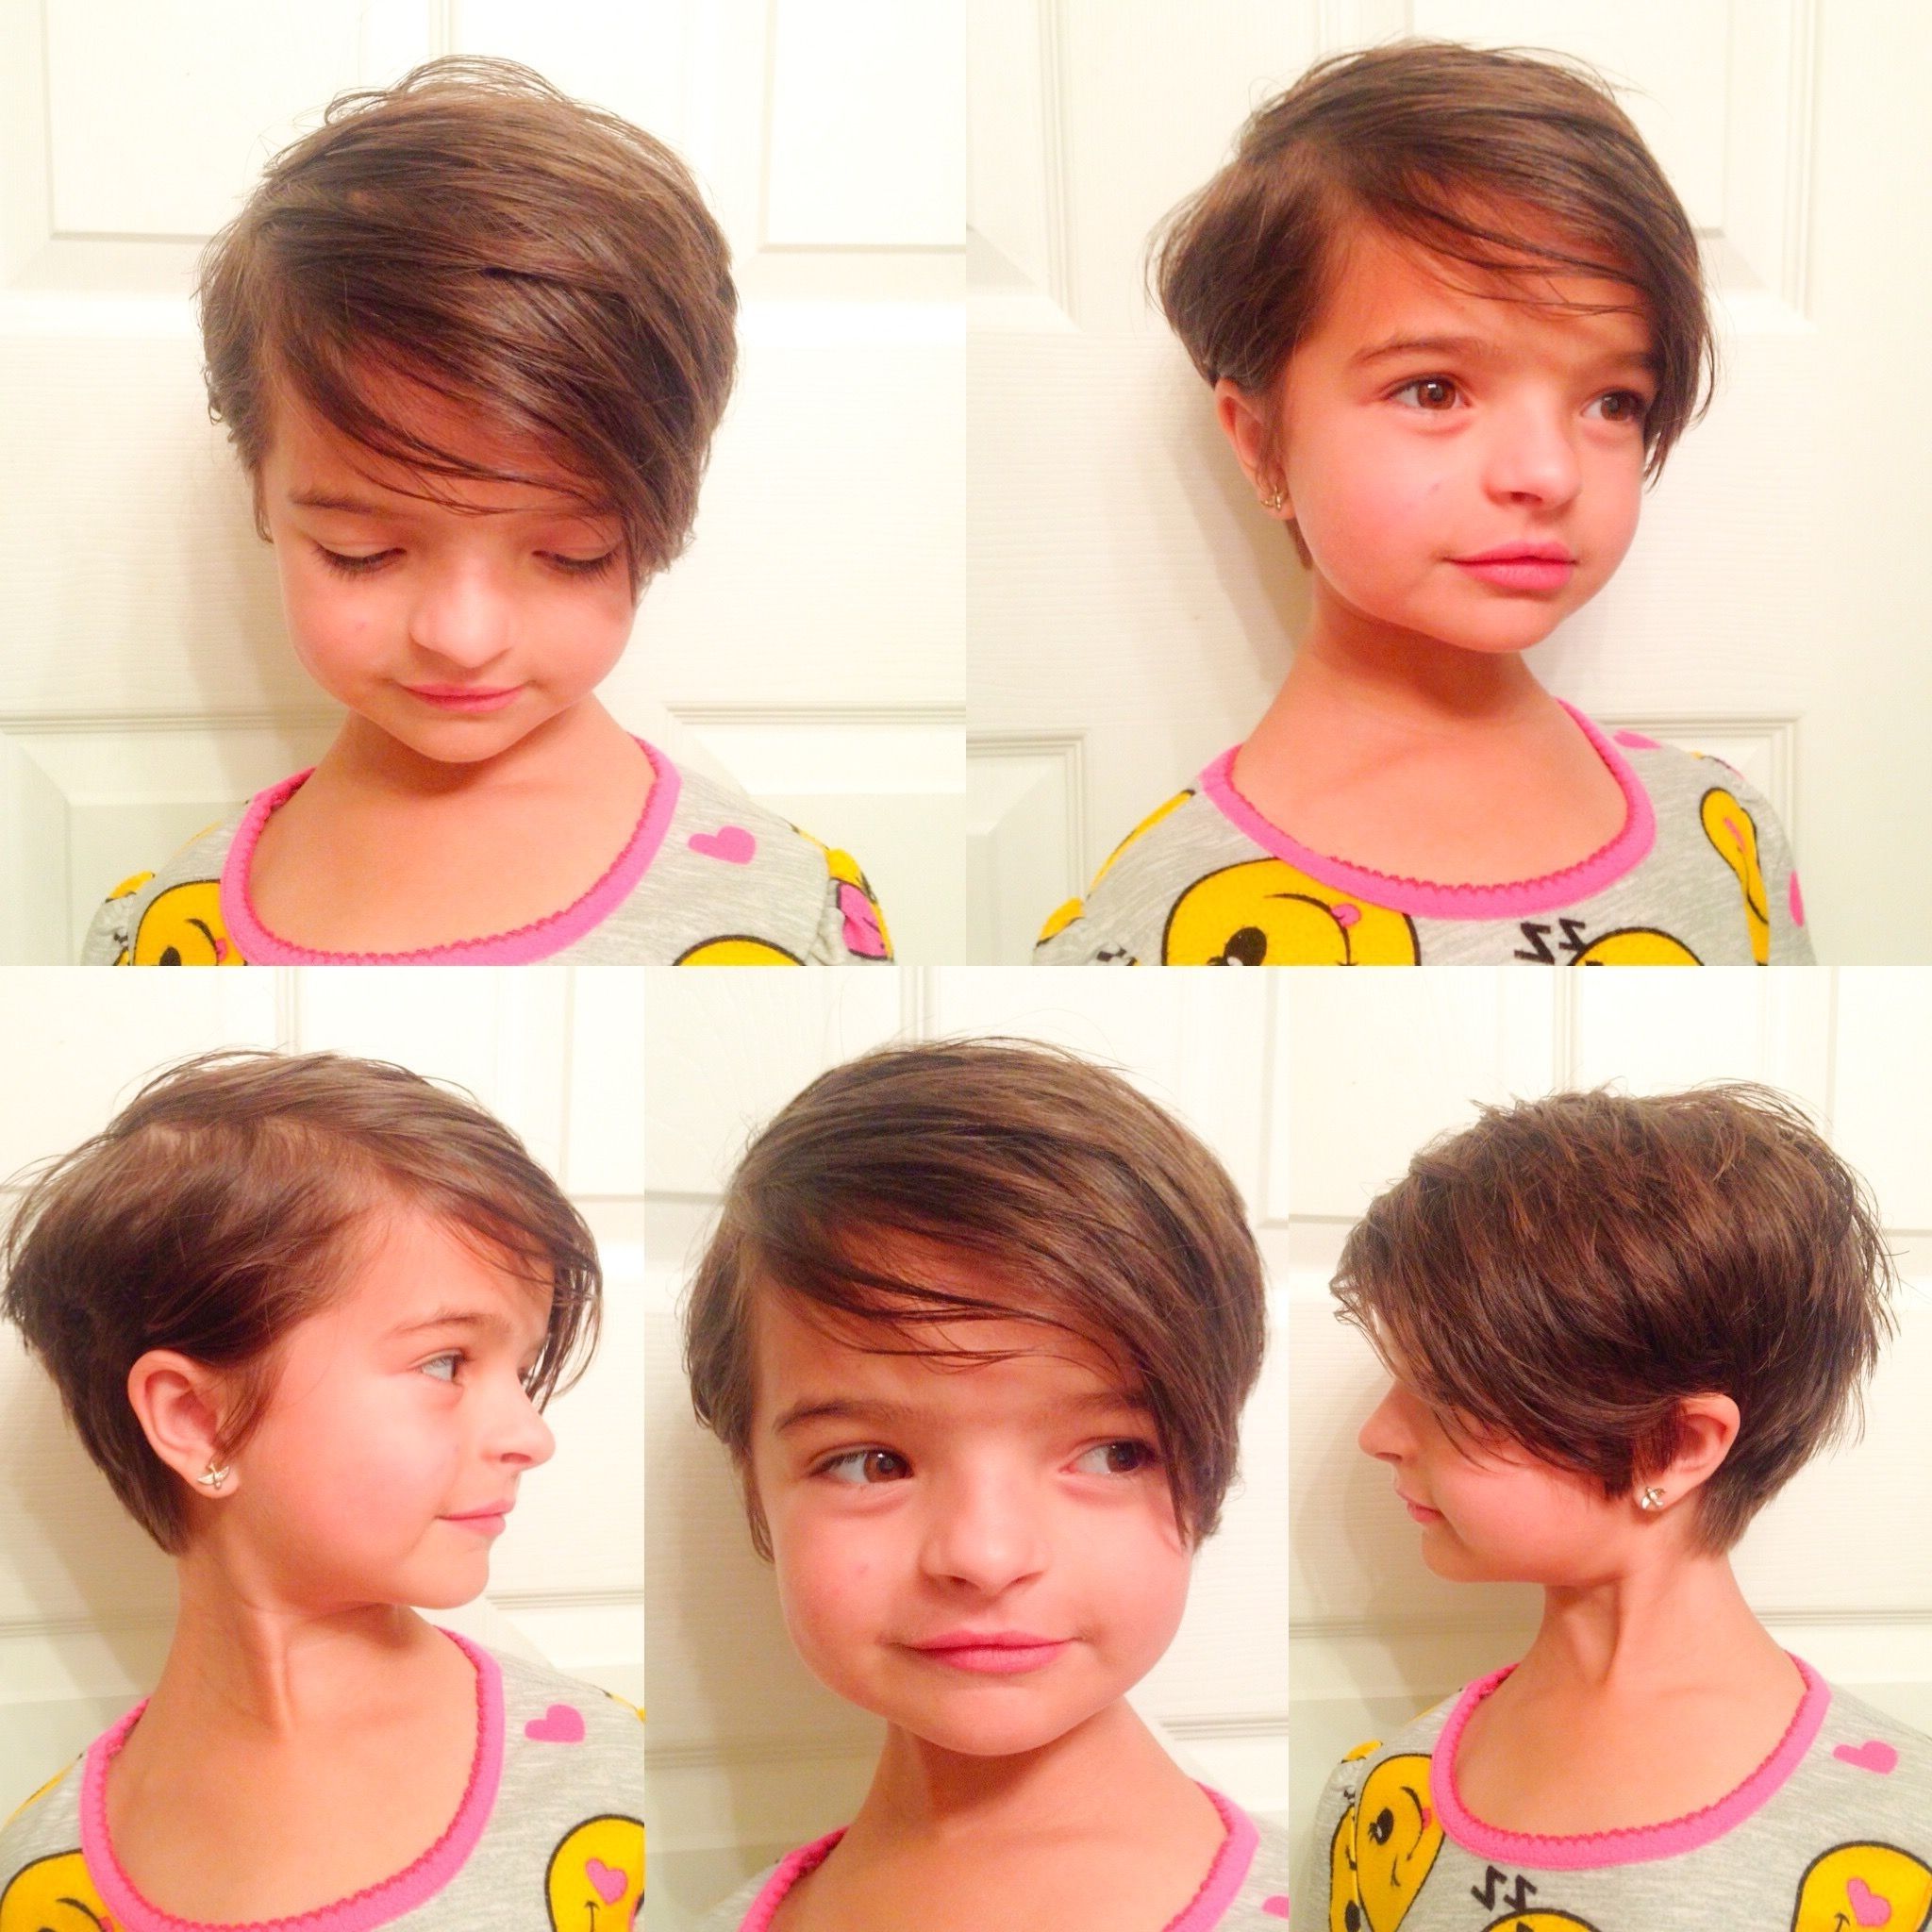 Little Girl's Haircut, Little Girl's Hairstyle, Pixie Cut, Short Regarding Latest Short Pixie Hairstyles For Little Girls (Photo 1 of 15)